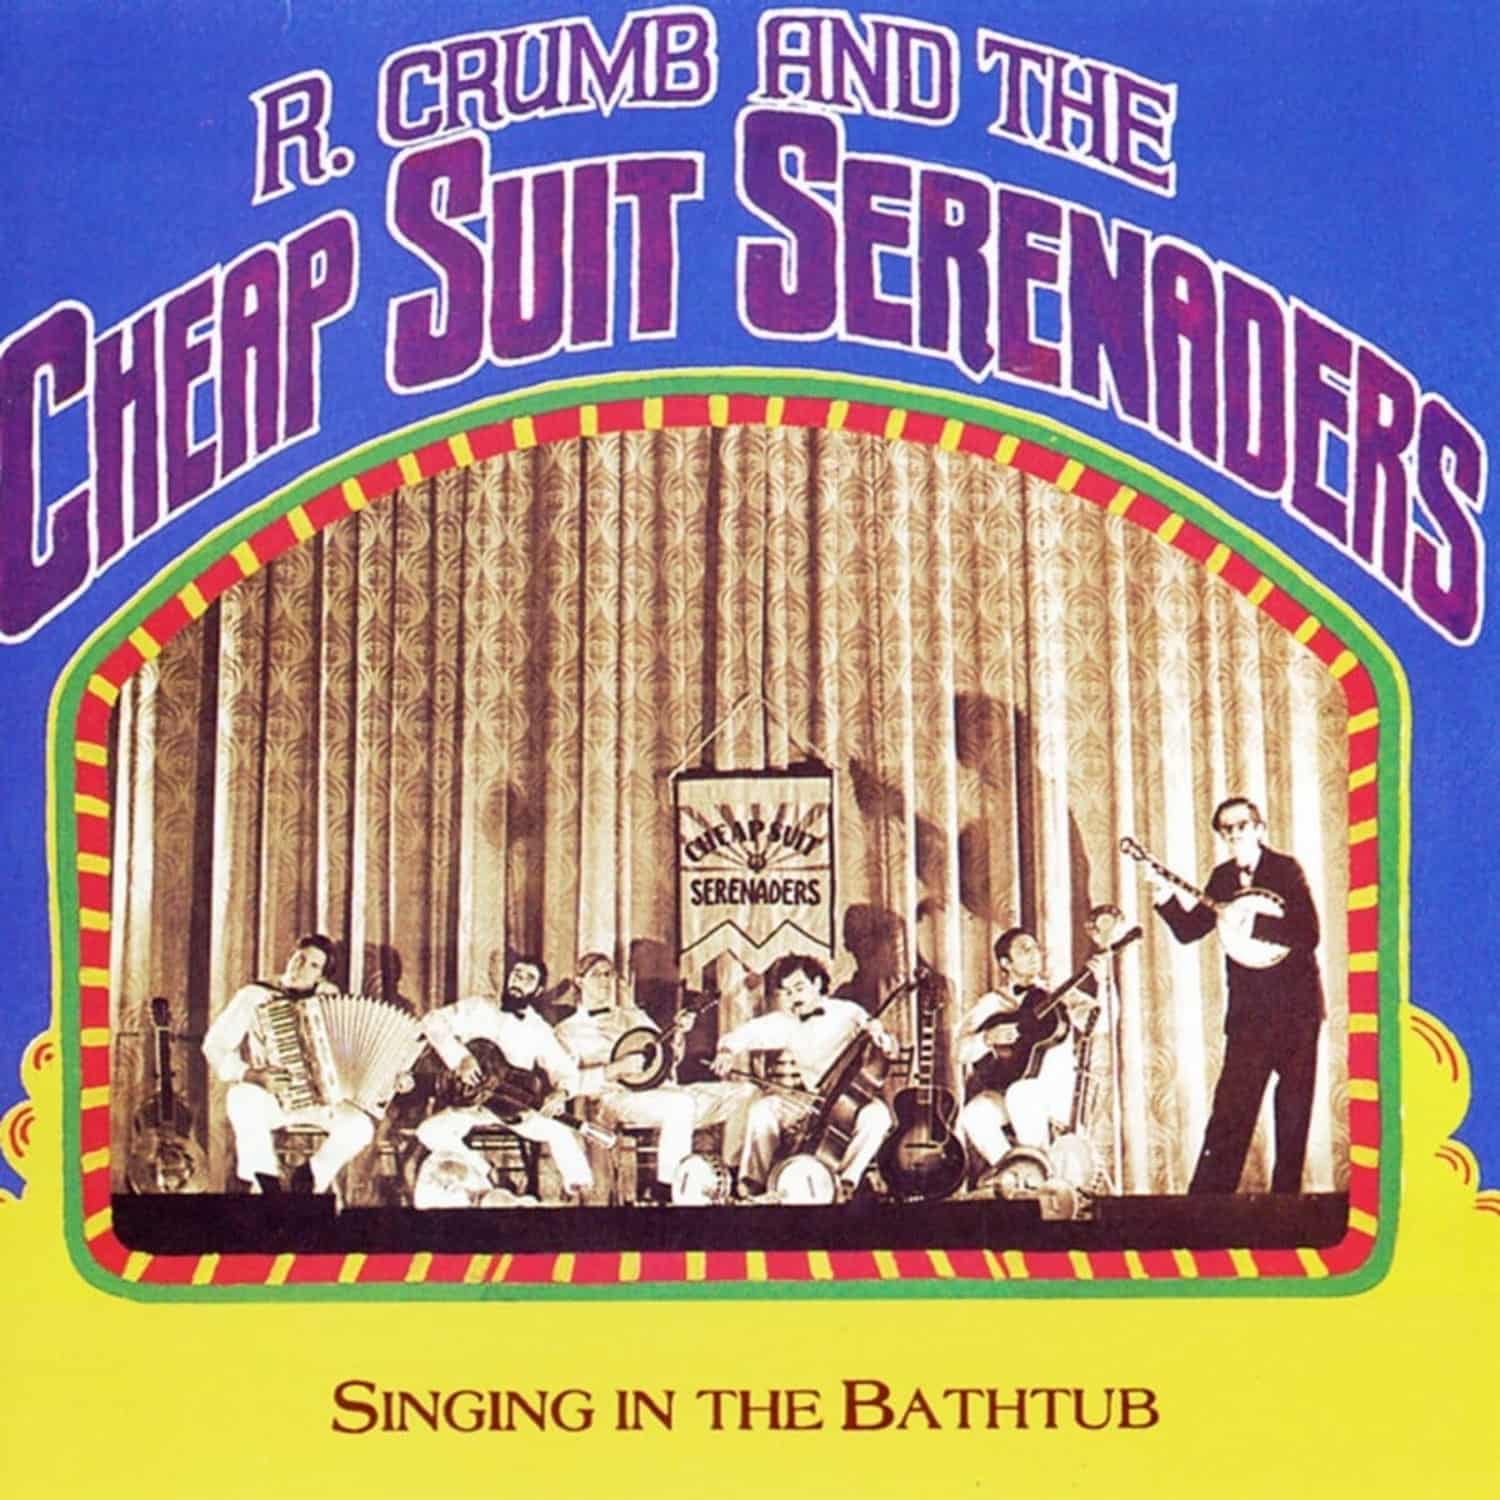 Robert Crumb and His Cheap Suit Serenaders - SINGING IN THE BATHTUB 